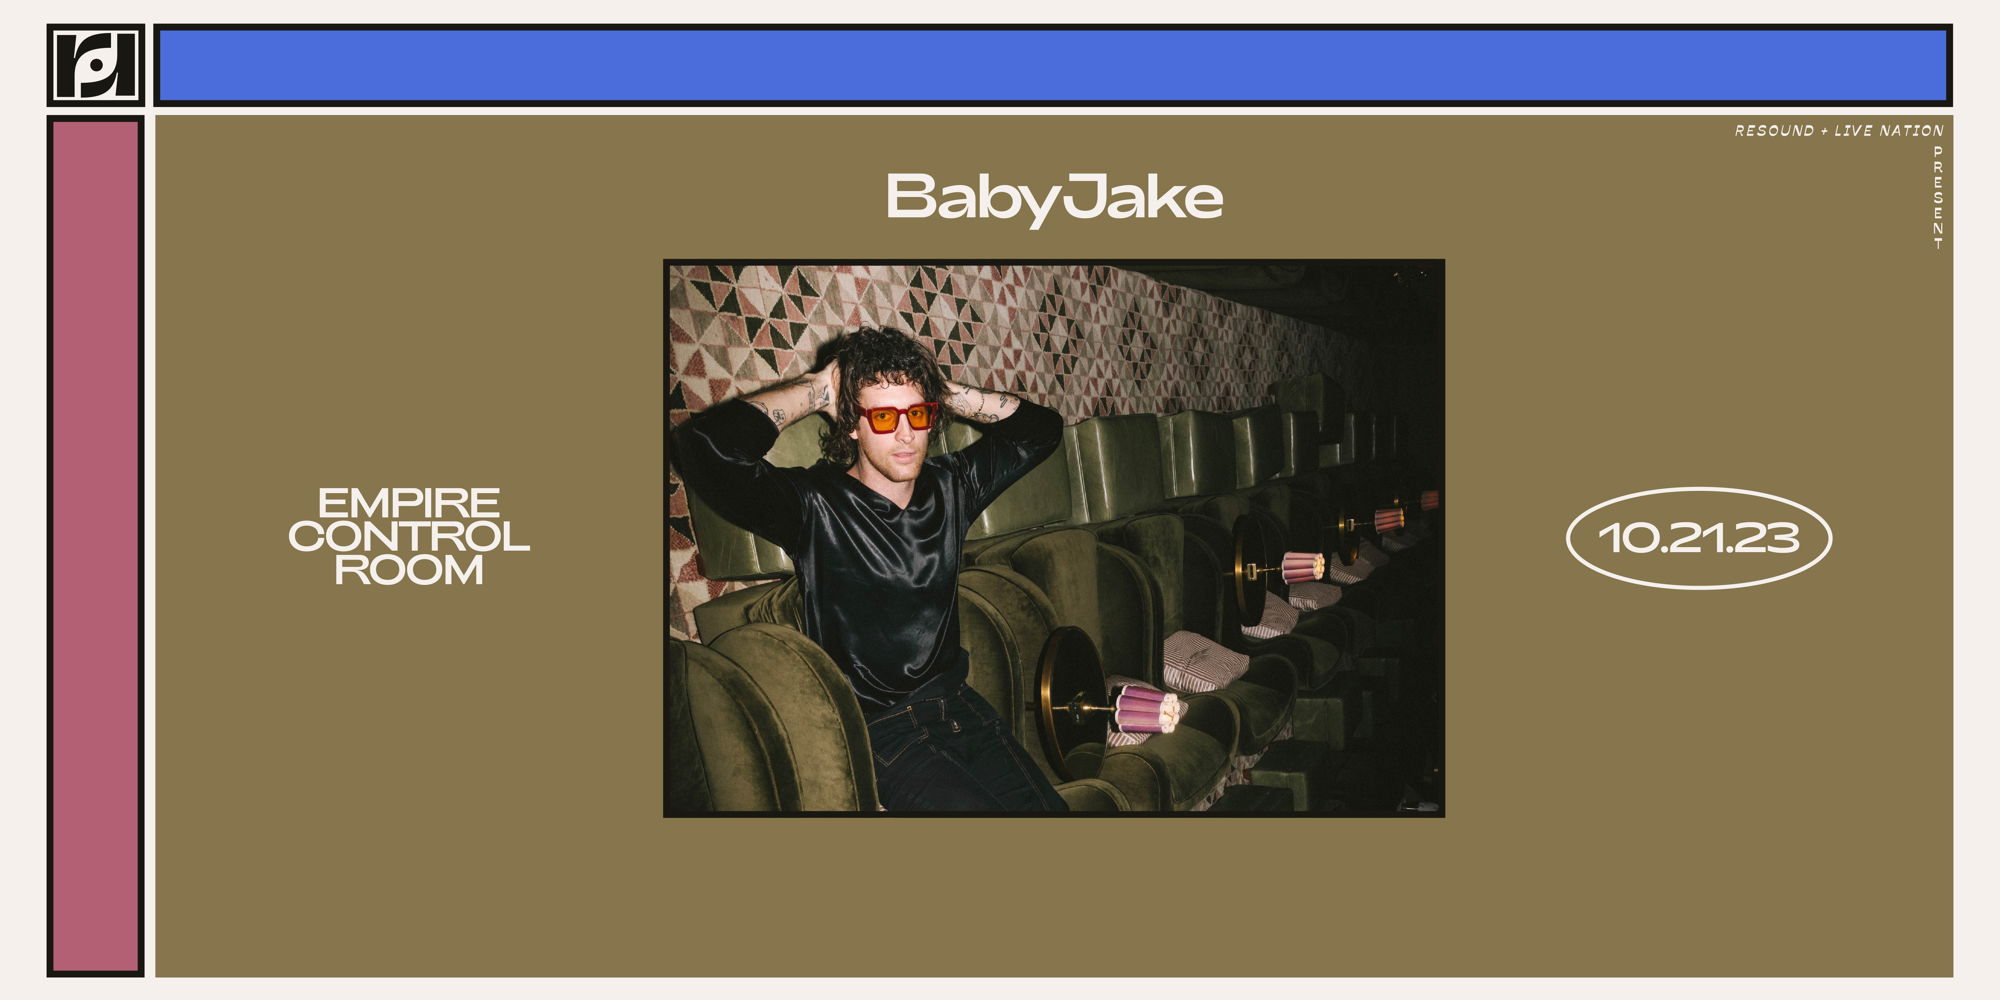 Live Nation & Resound Present: BabyJake at Empire Control Room promotional image